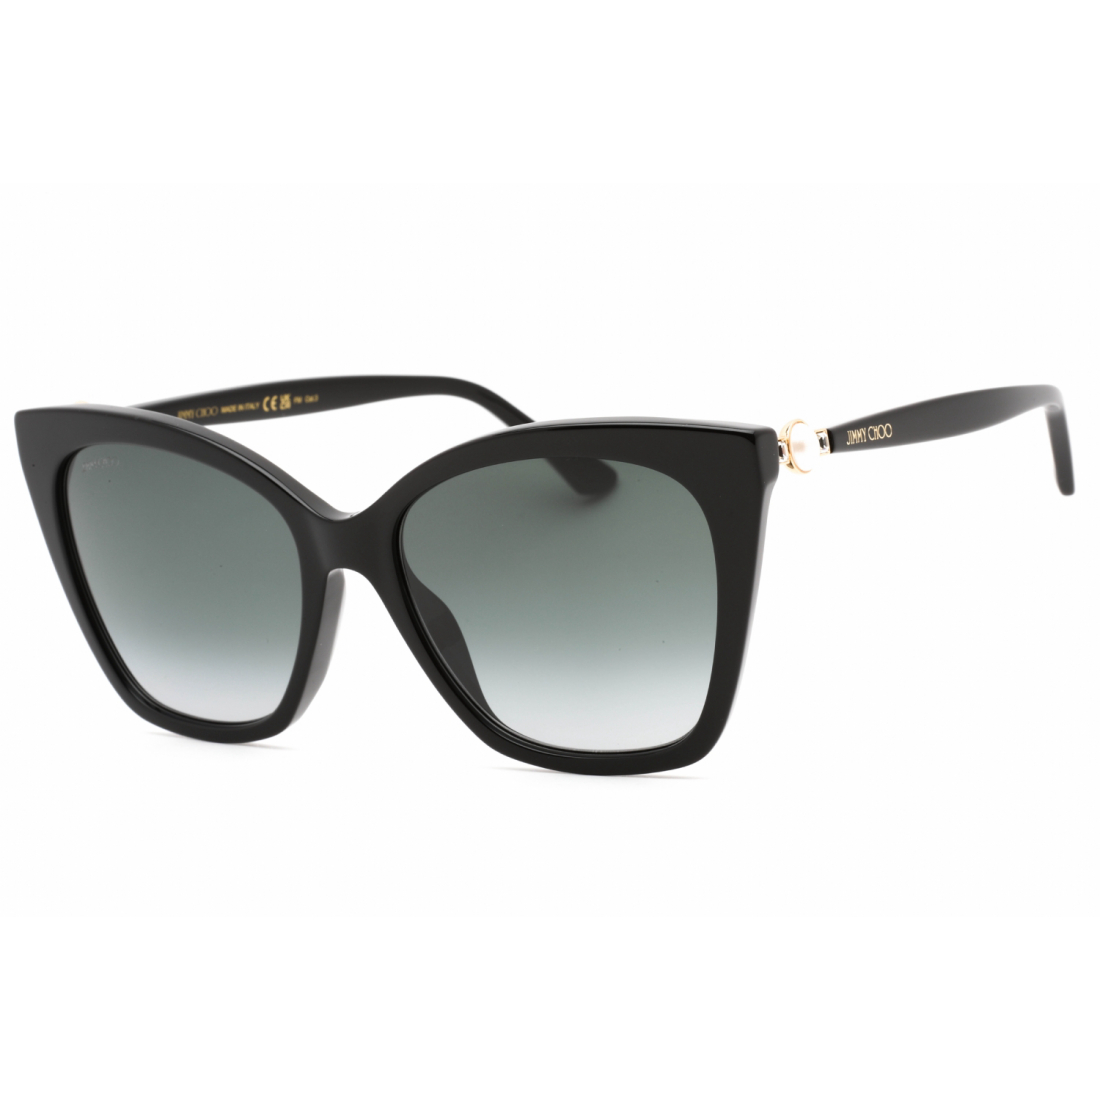 Women's 'RUA/G/S 807 BLACK' Sunglasses